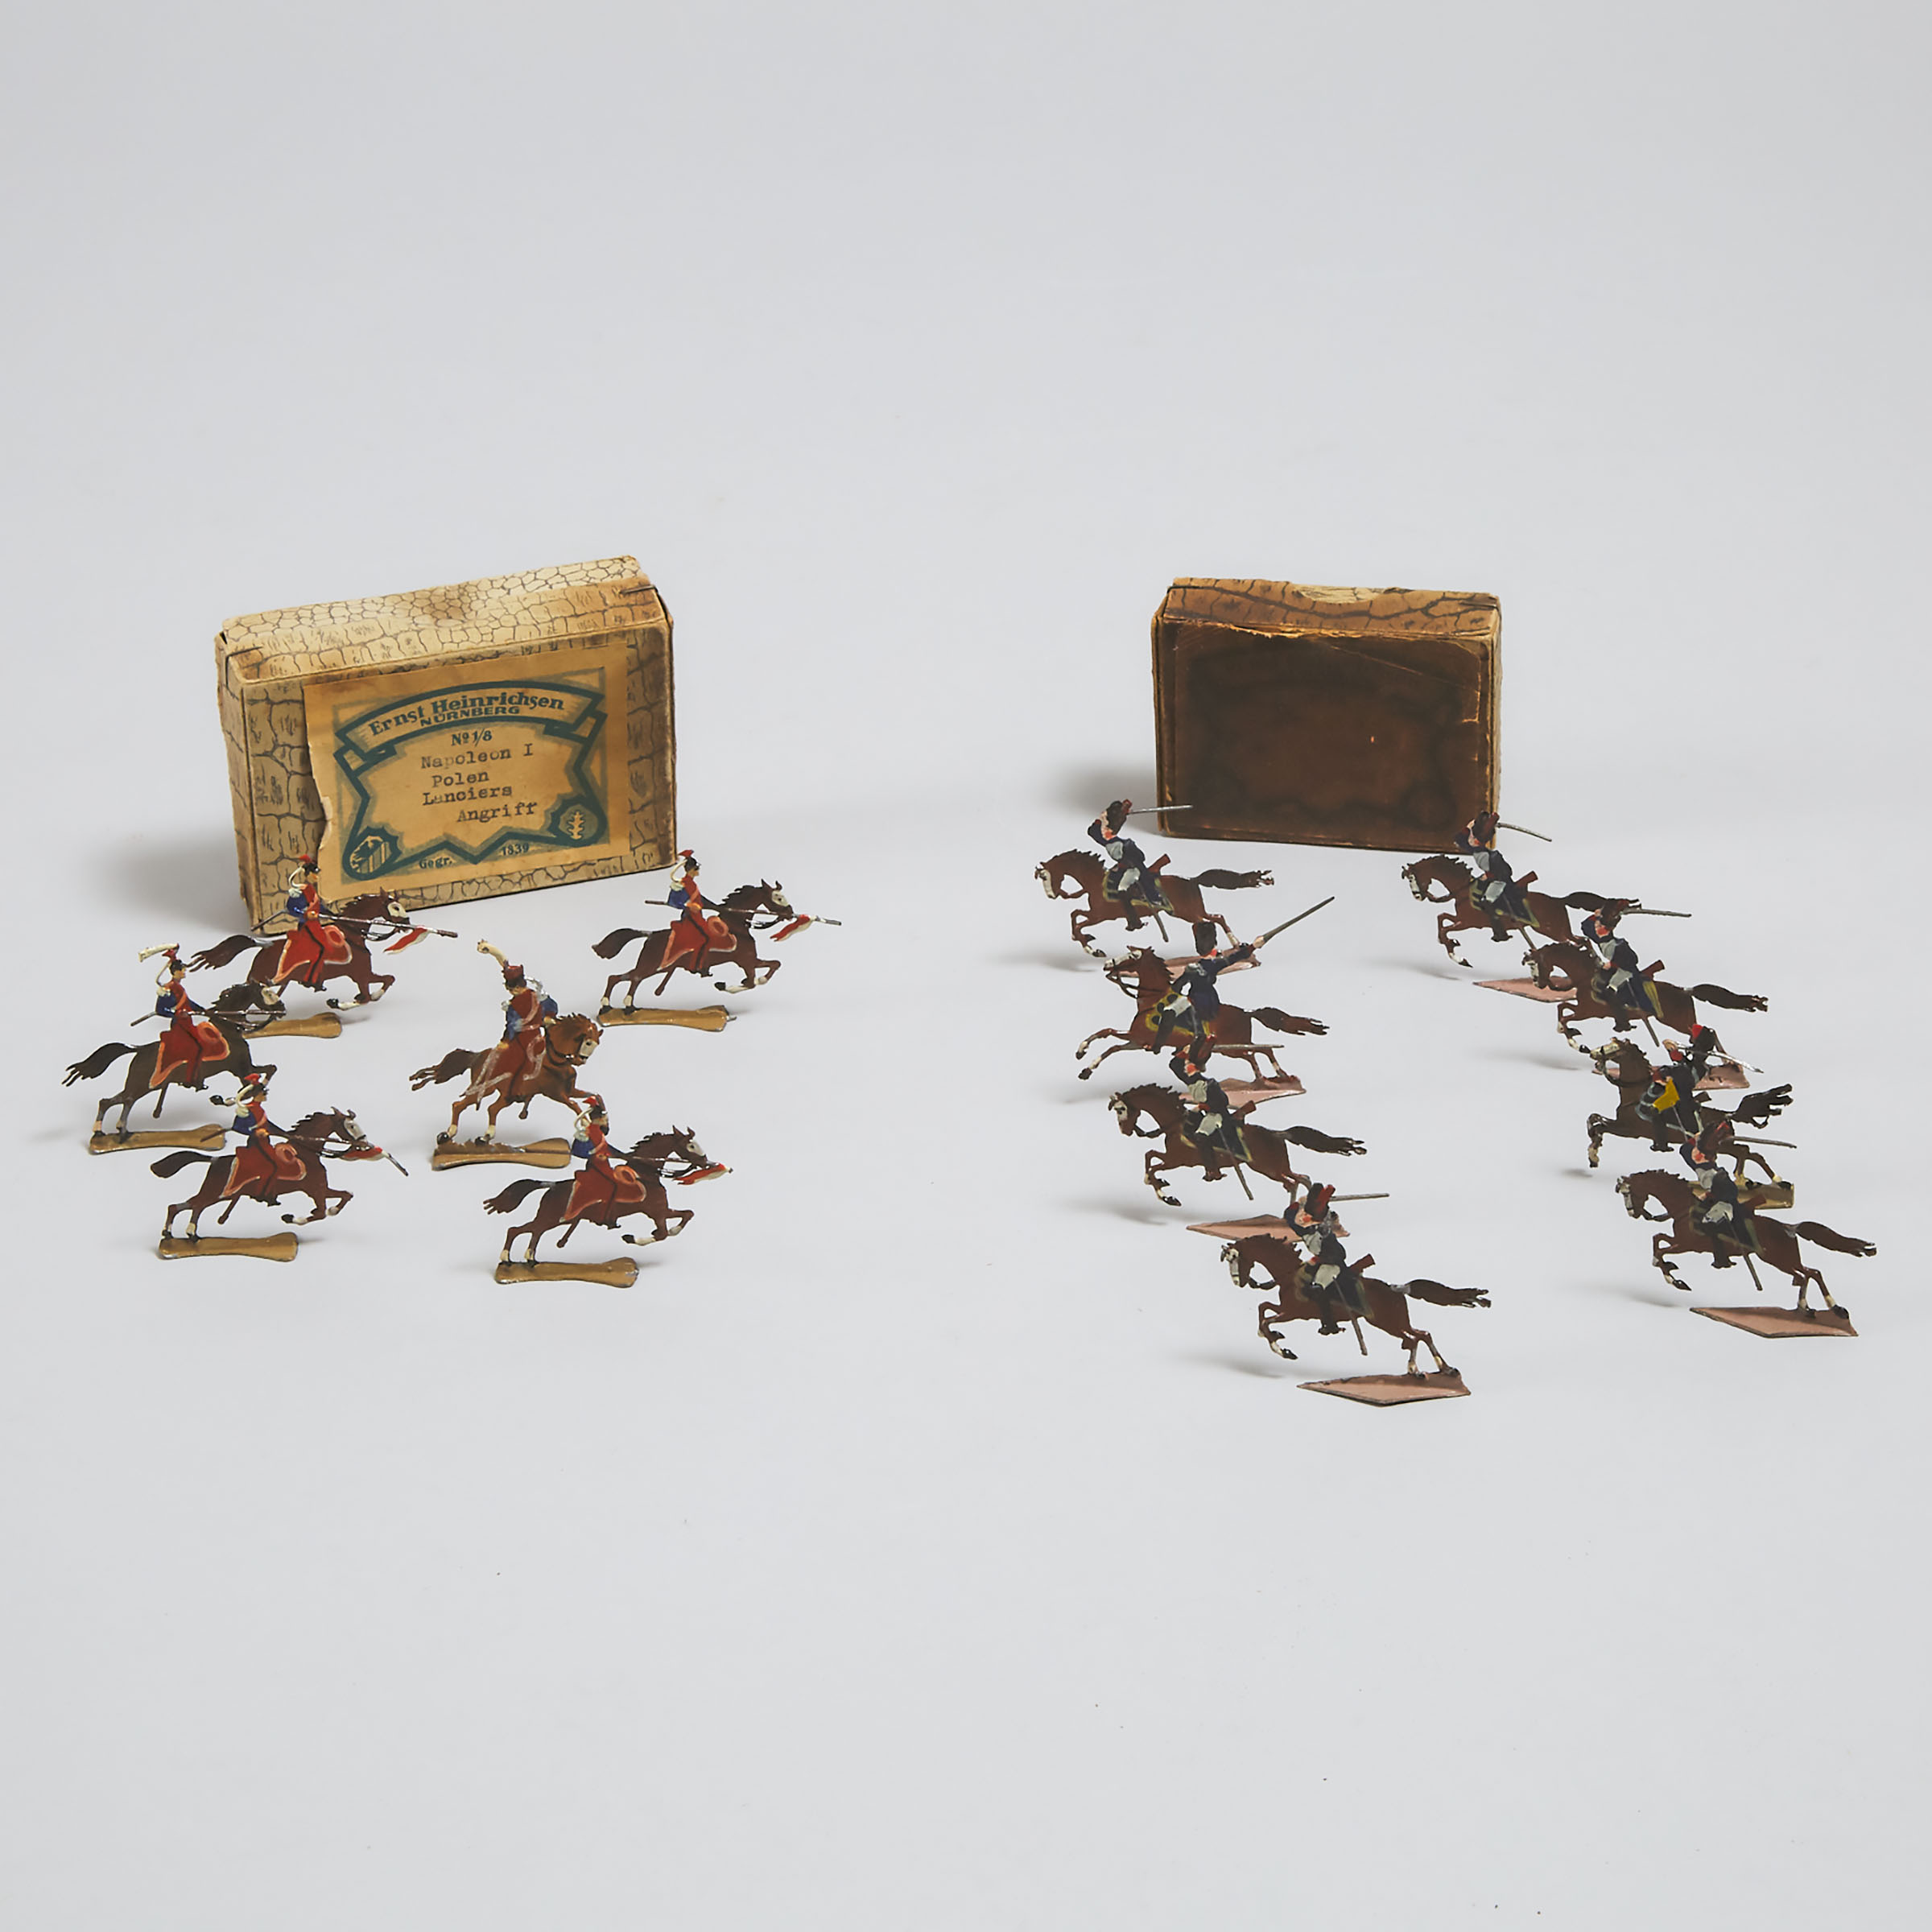 German Painted Metal Napoleonic War Equestrian Game Pieces, Ernst Heinrichsen, Nuremberg, early 20th century